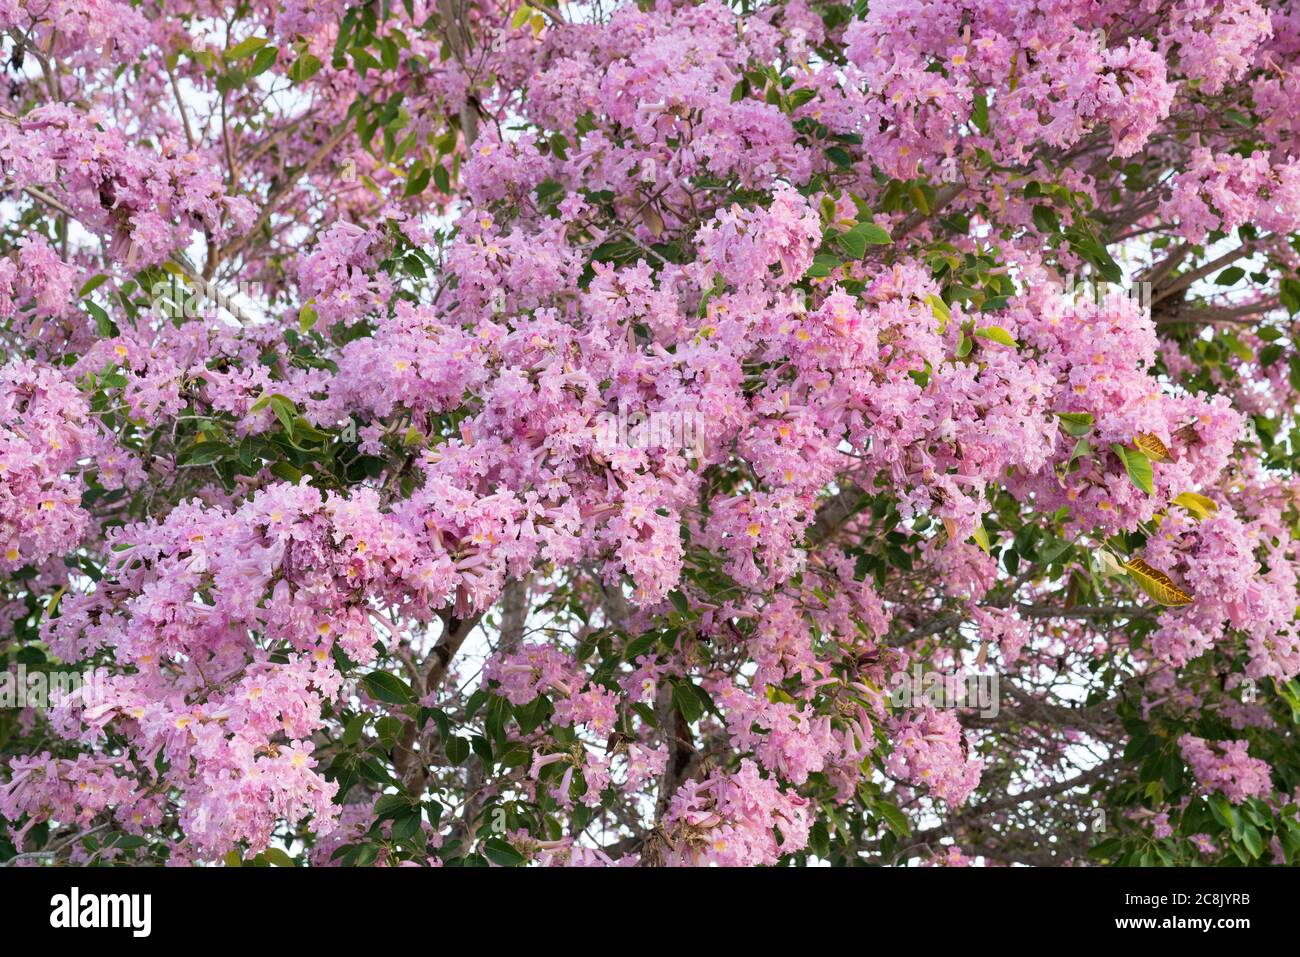 Beautiful Tabebuia paleri or Handroanthus impetiginosus covered in pink flowers Stock Photo